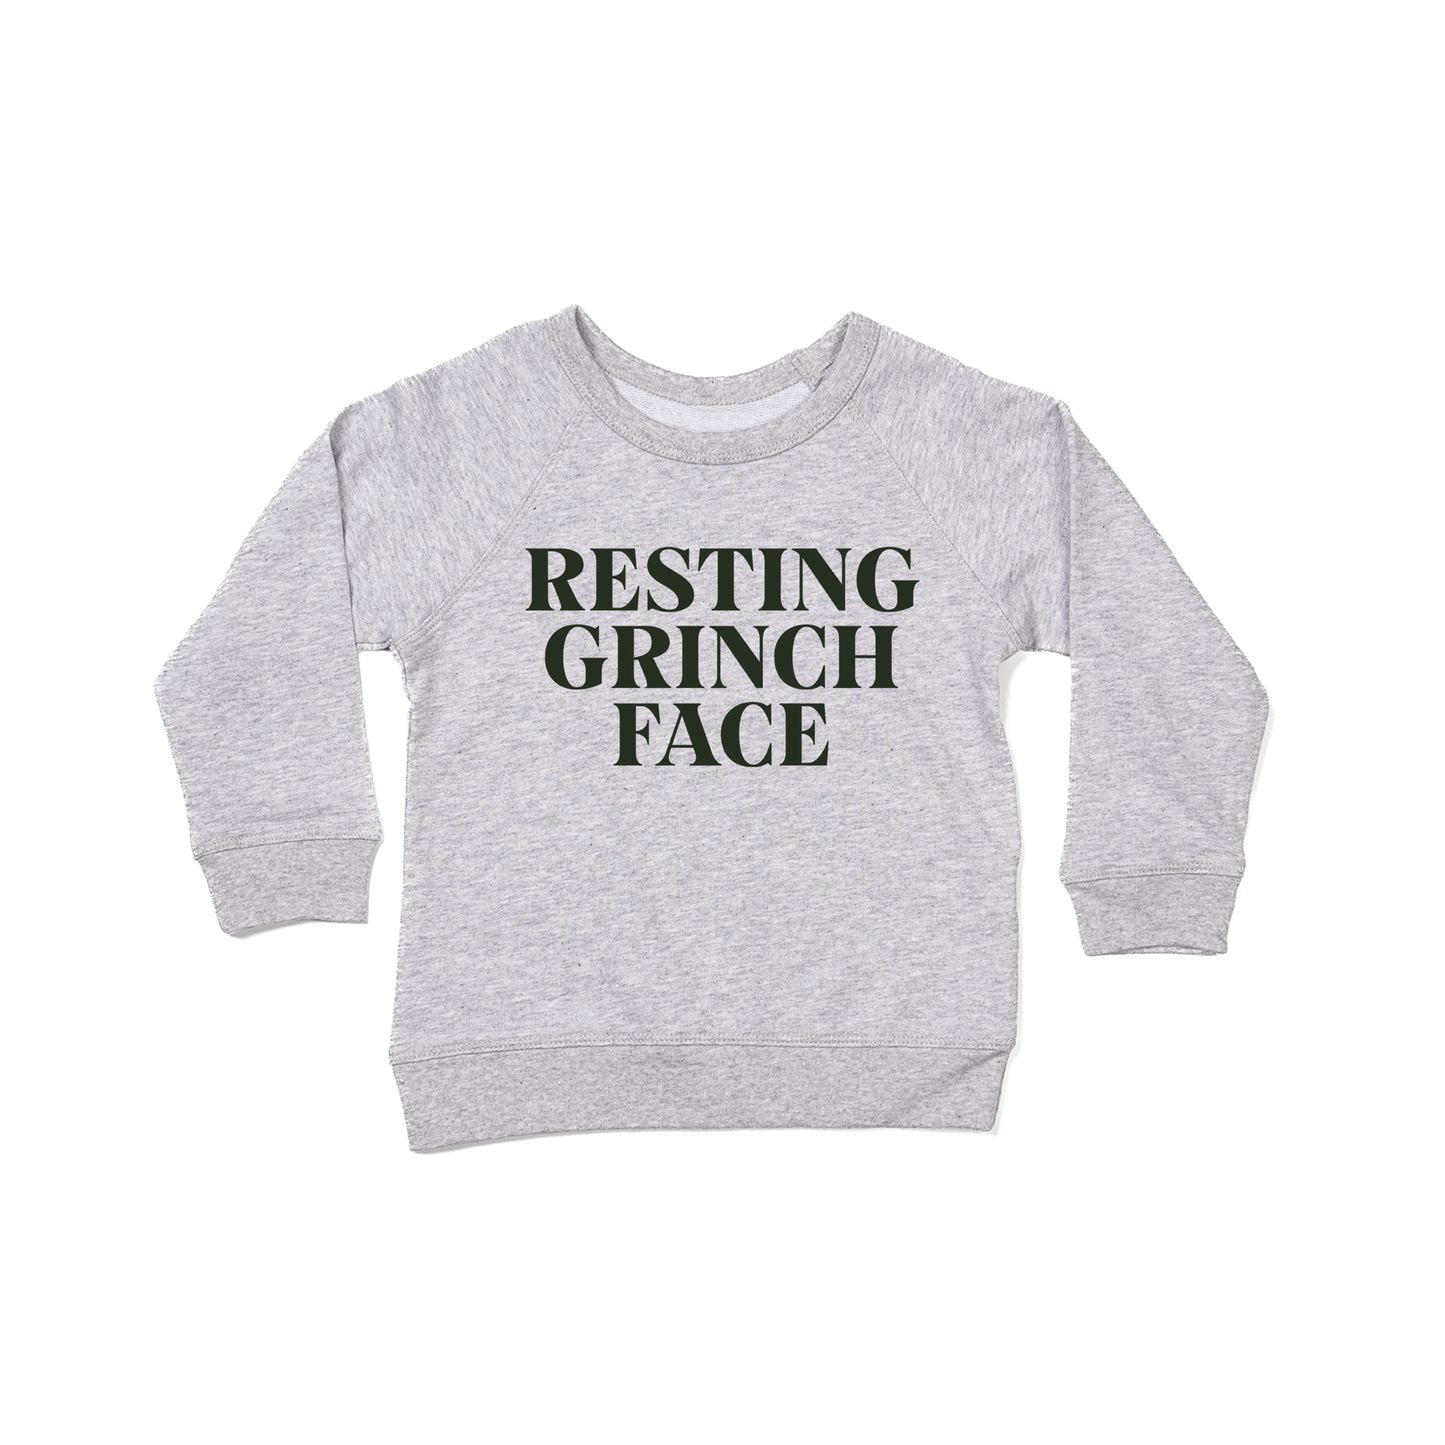 Resting Grinch Face (Spruce) - Kids Sweatshirt (Heather Gray)